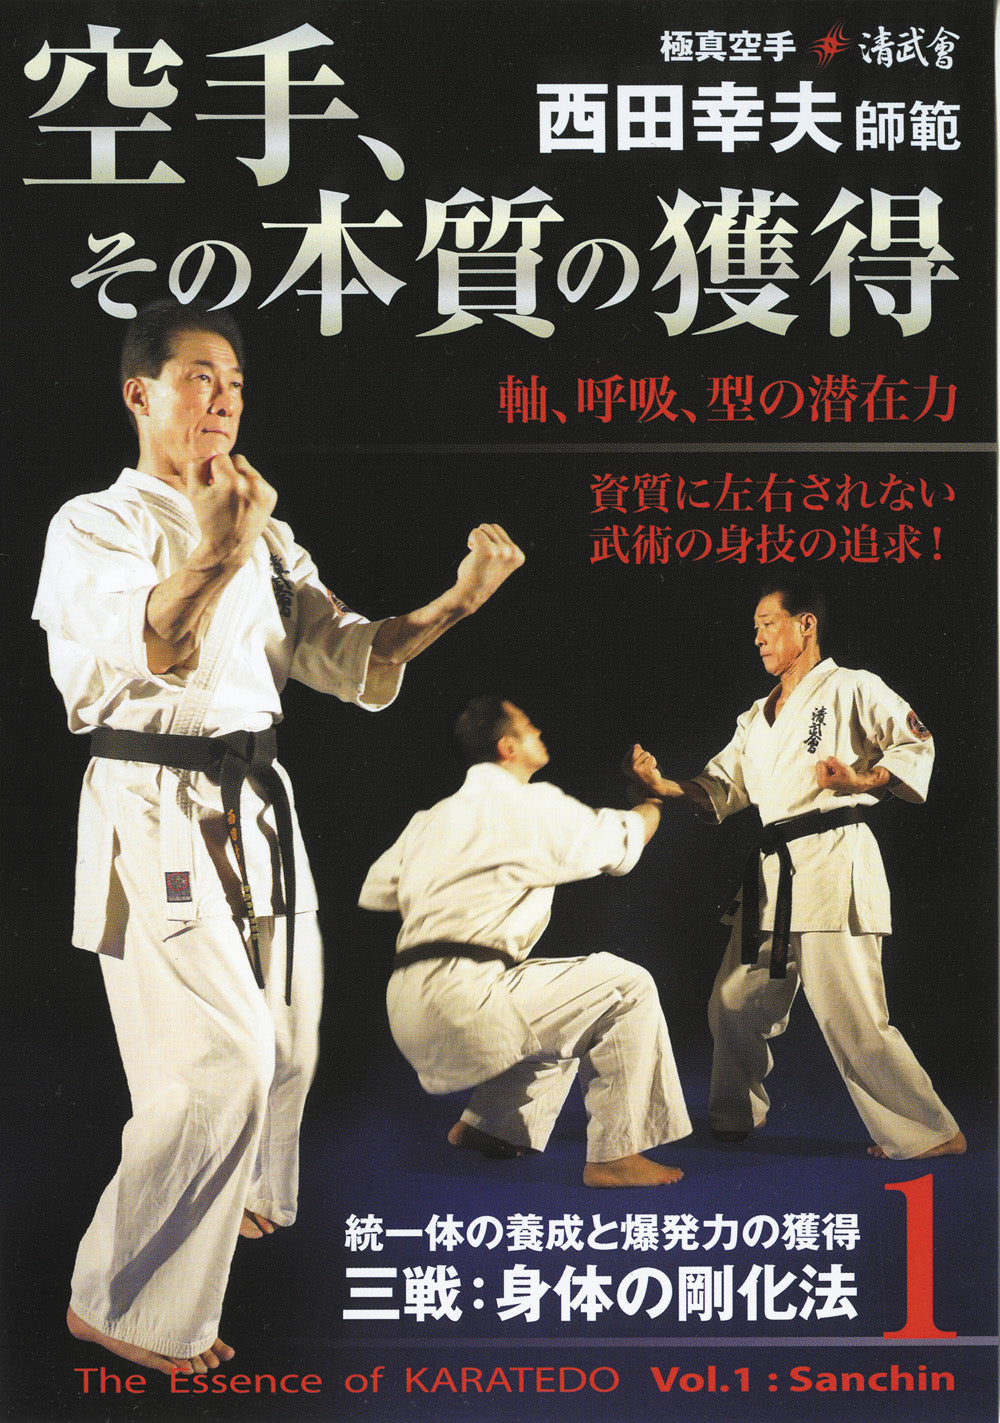 The Essence of Karatedo DVD 1: Sanchin by Yukio Nishida